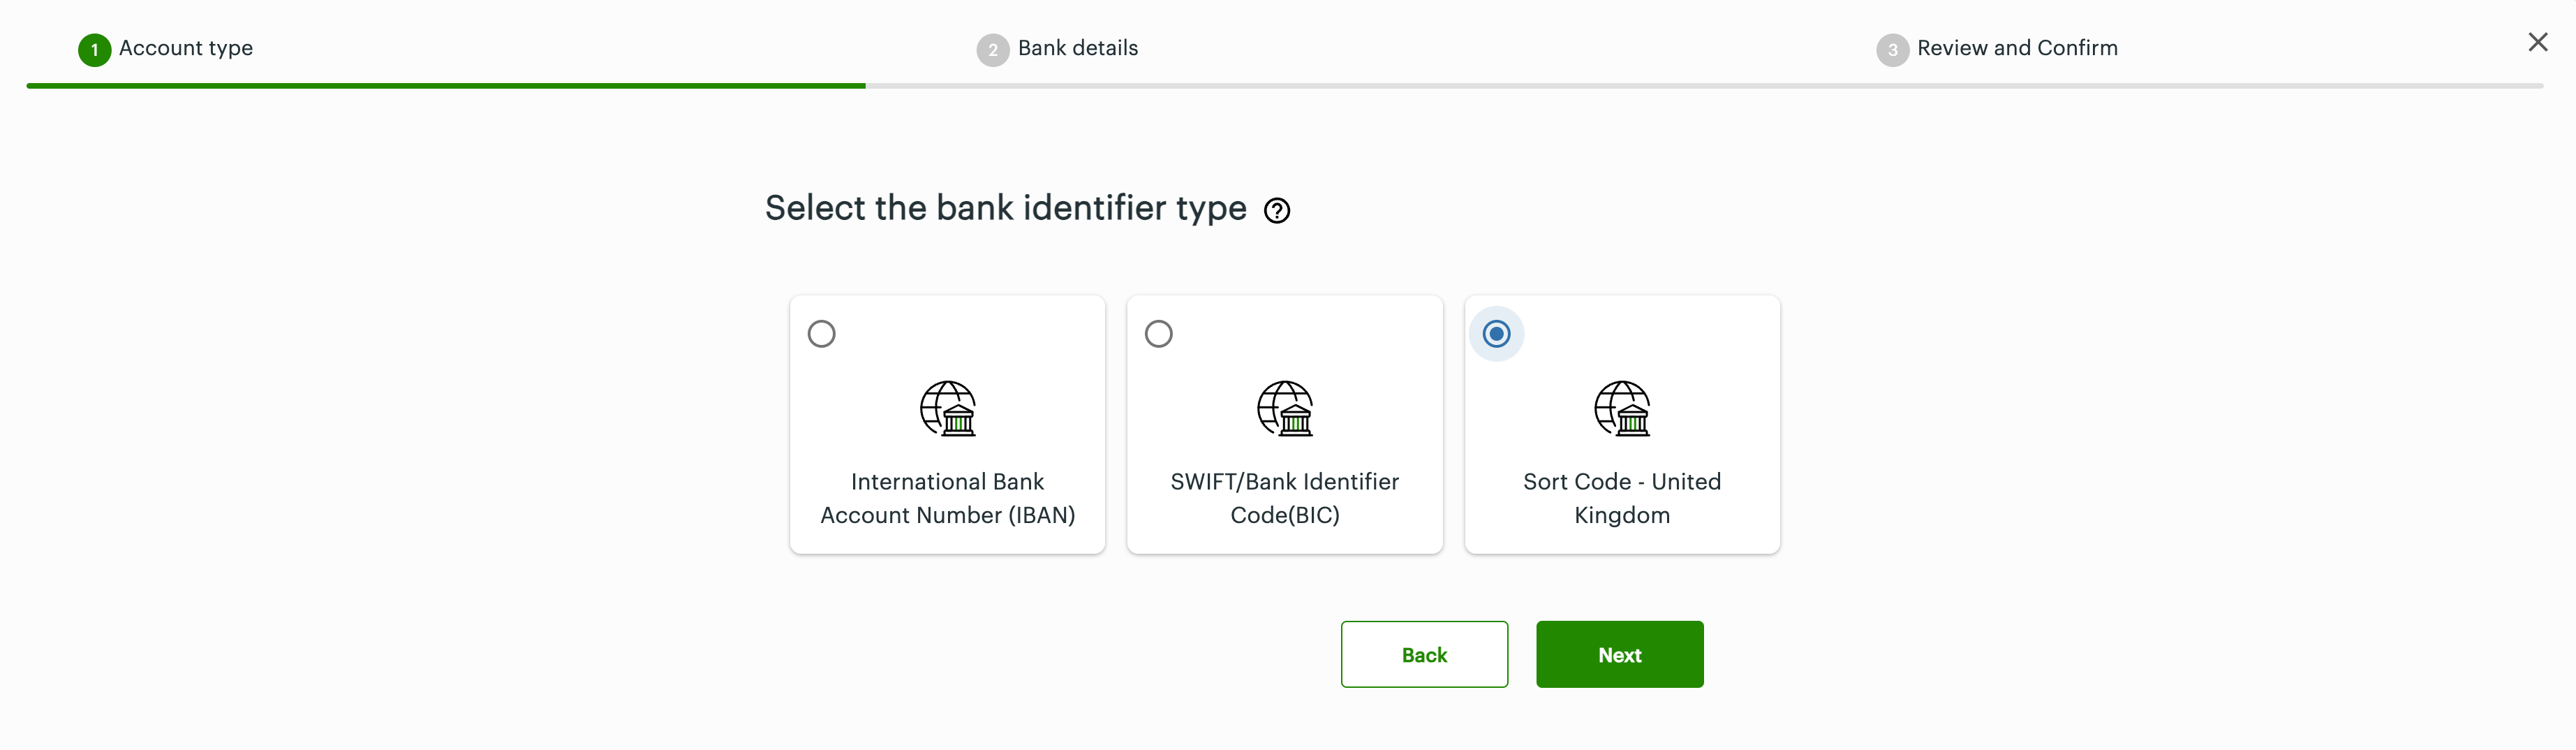 Select the bank identifier type: Sort code - UK